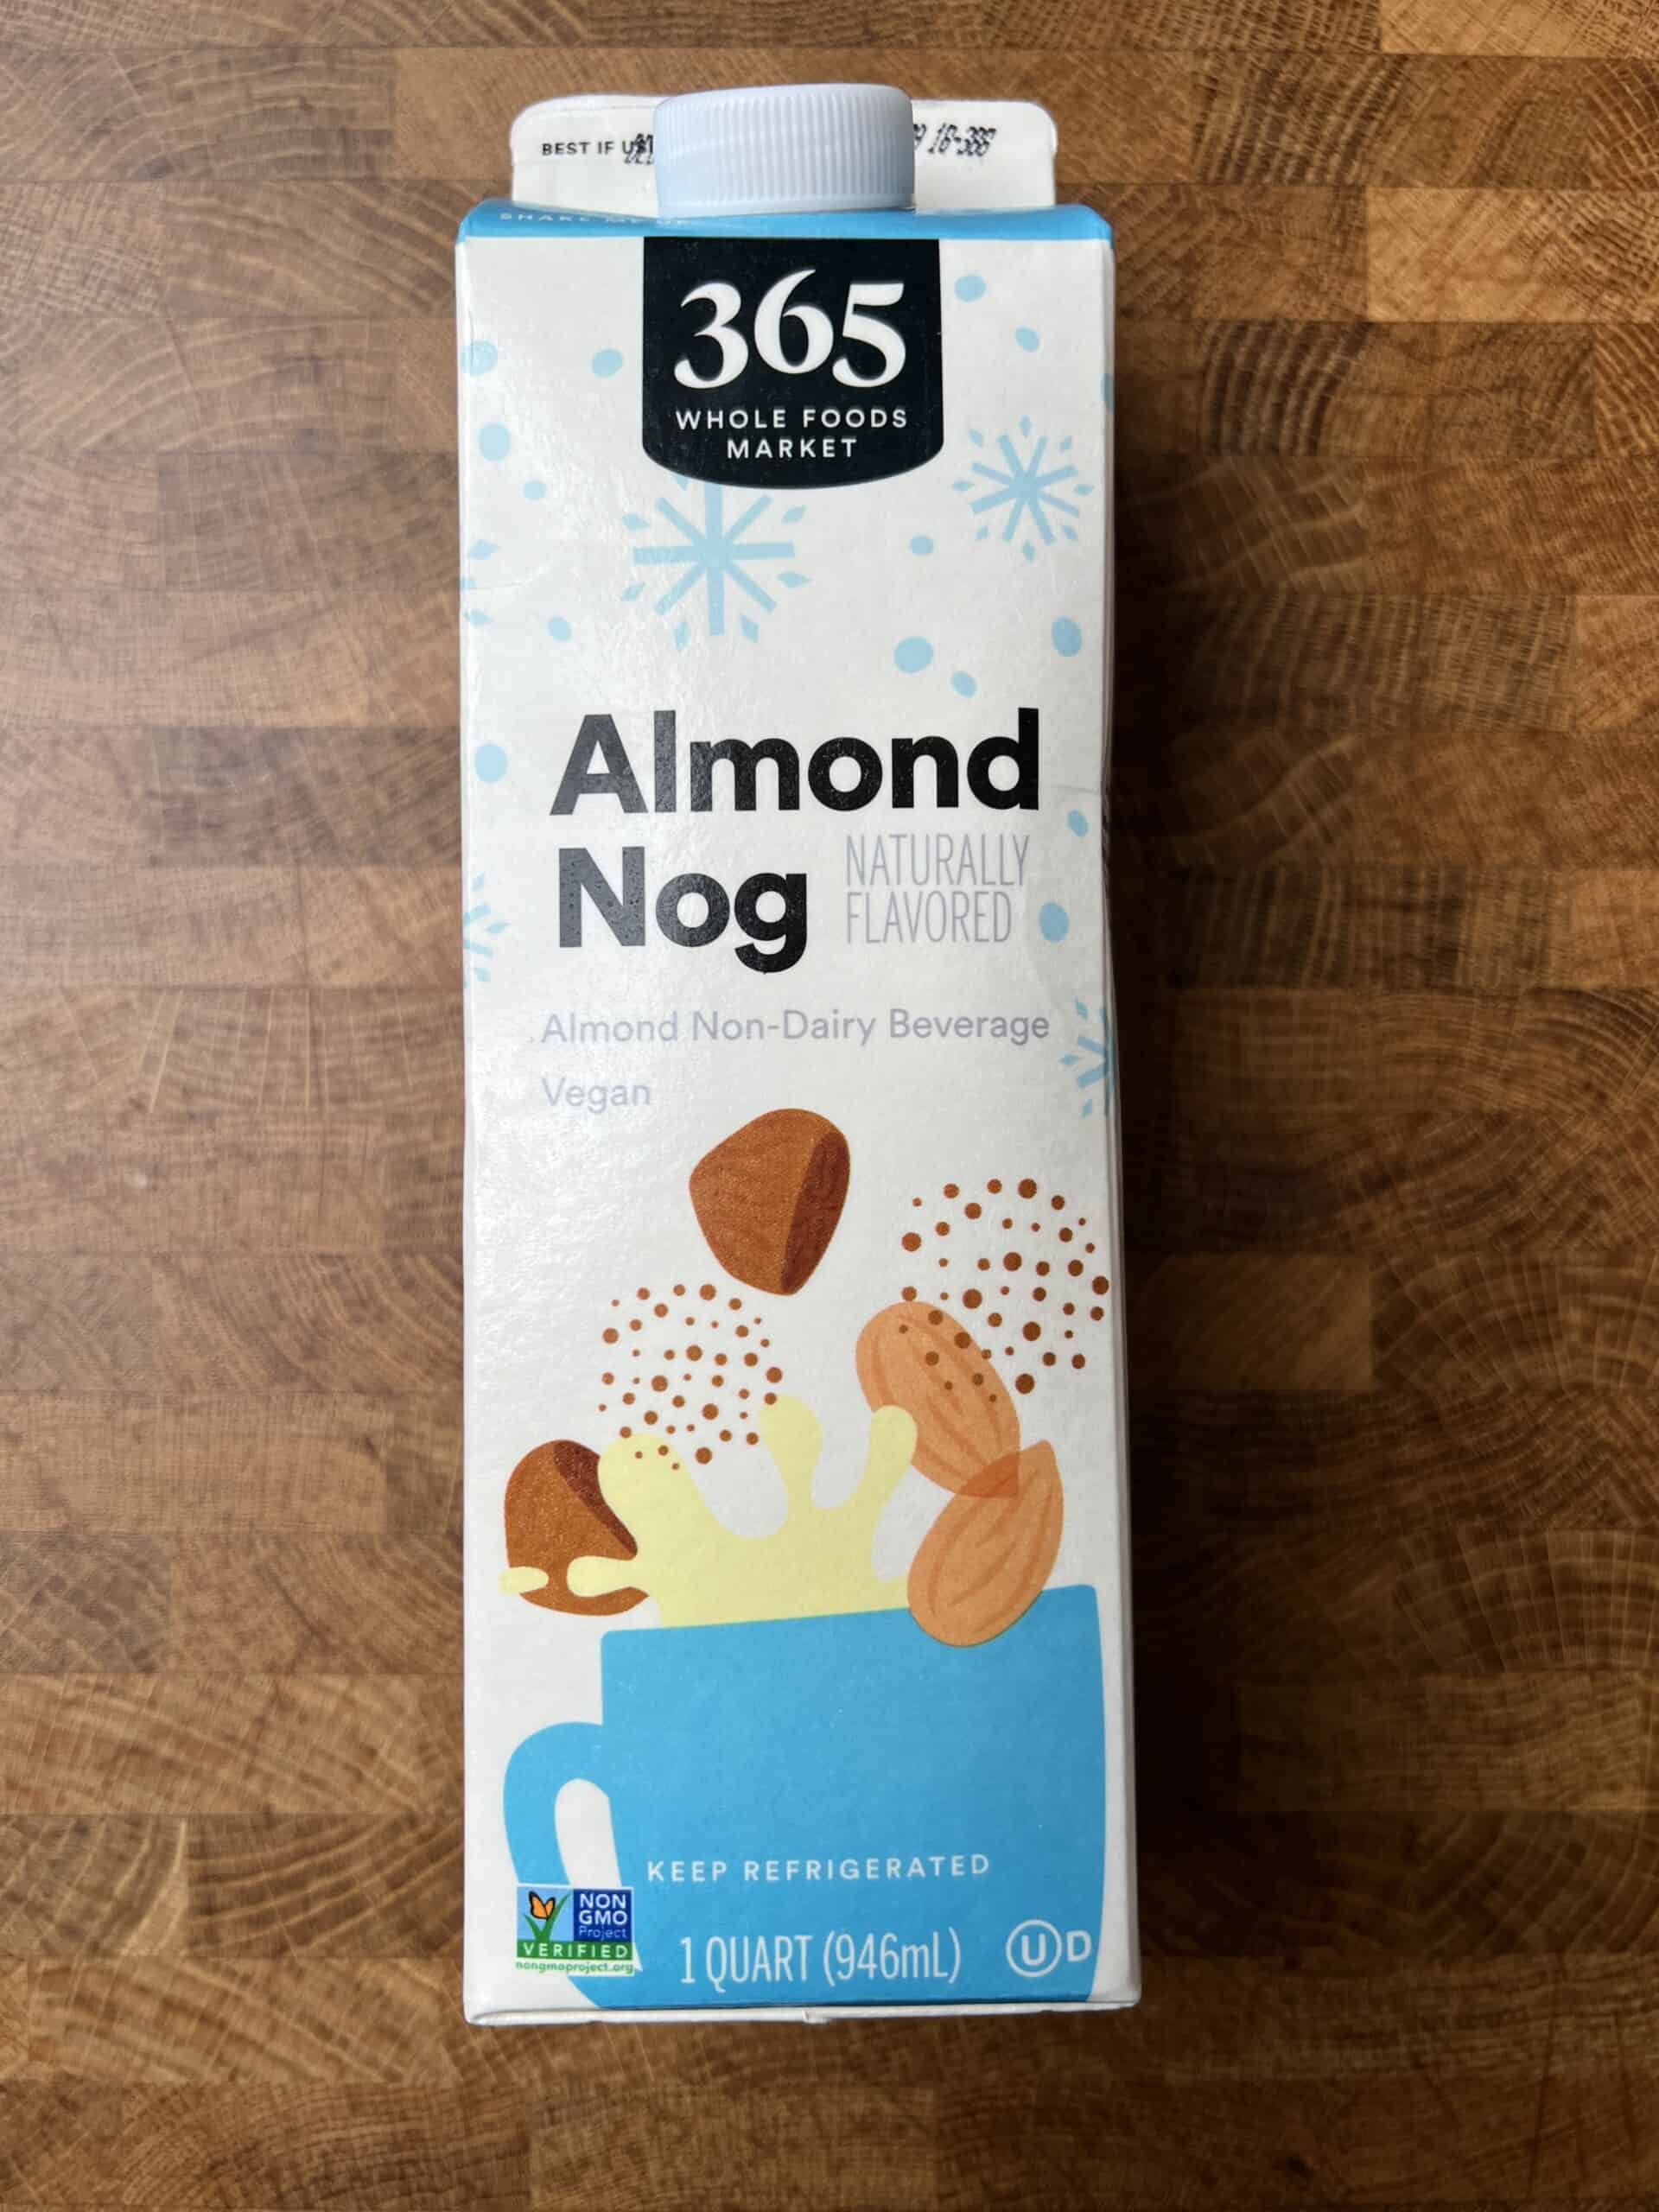 365 Whole Foods Market Almond Nog carton.